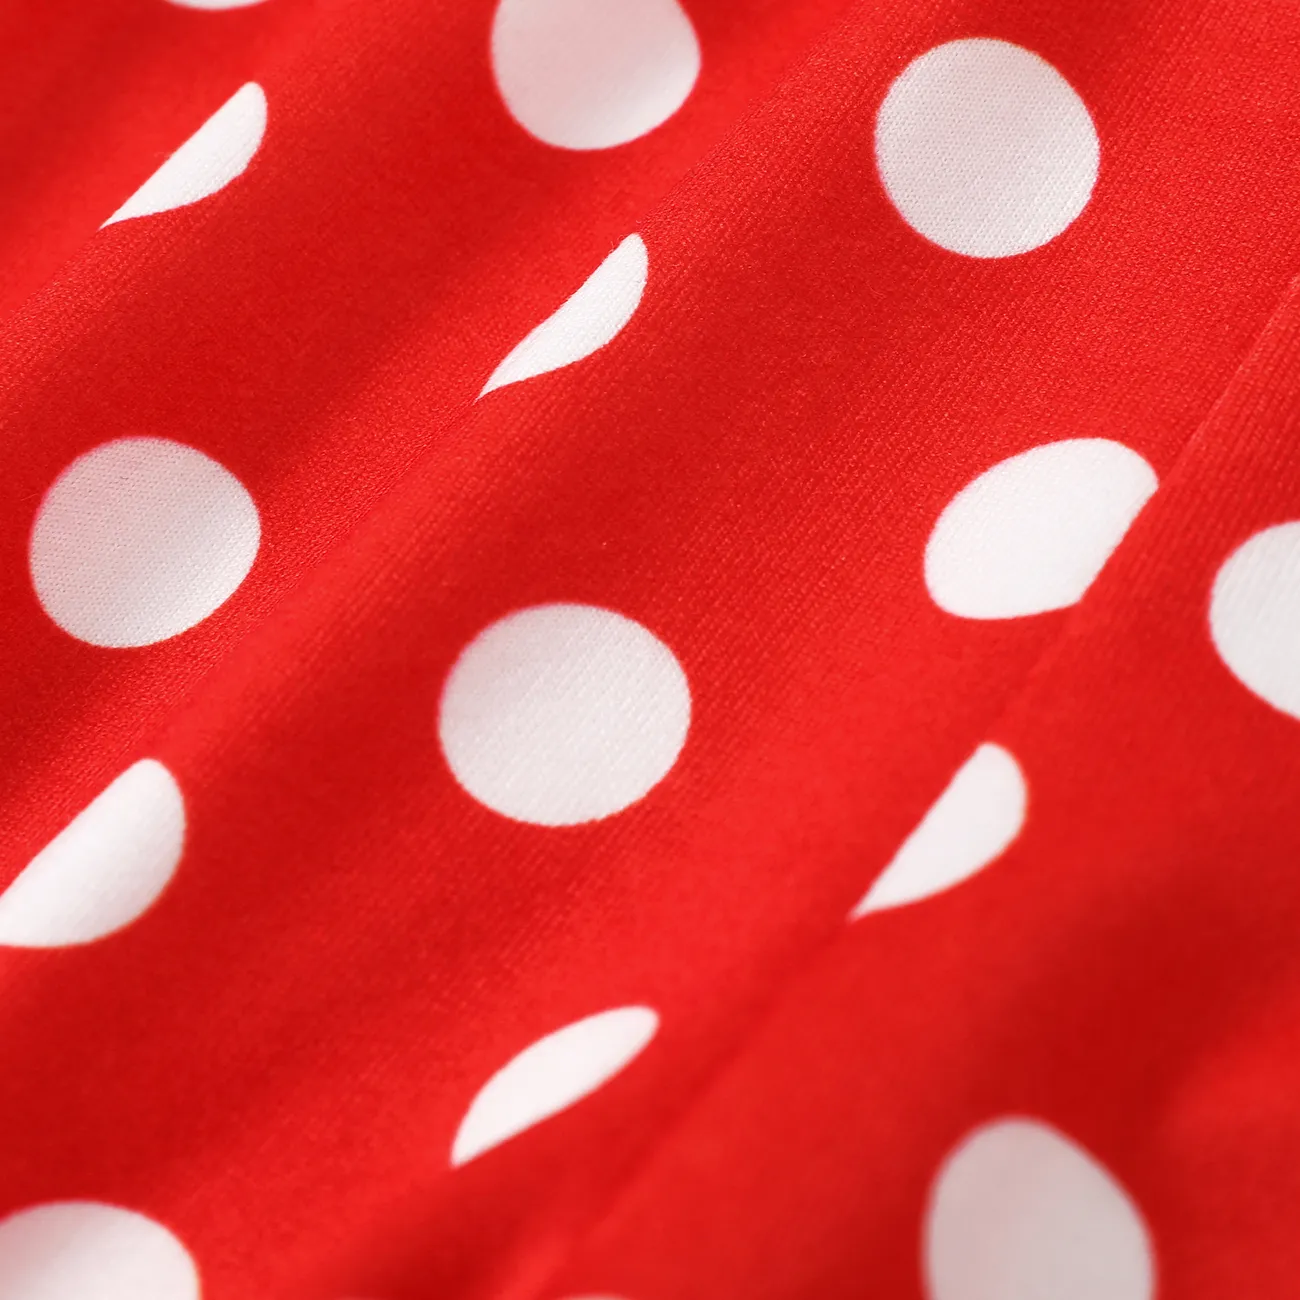 Baby Girl Bow Front Polka Dots Pants Leggings Red big image 1